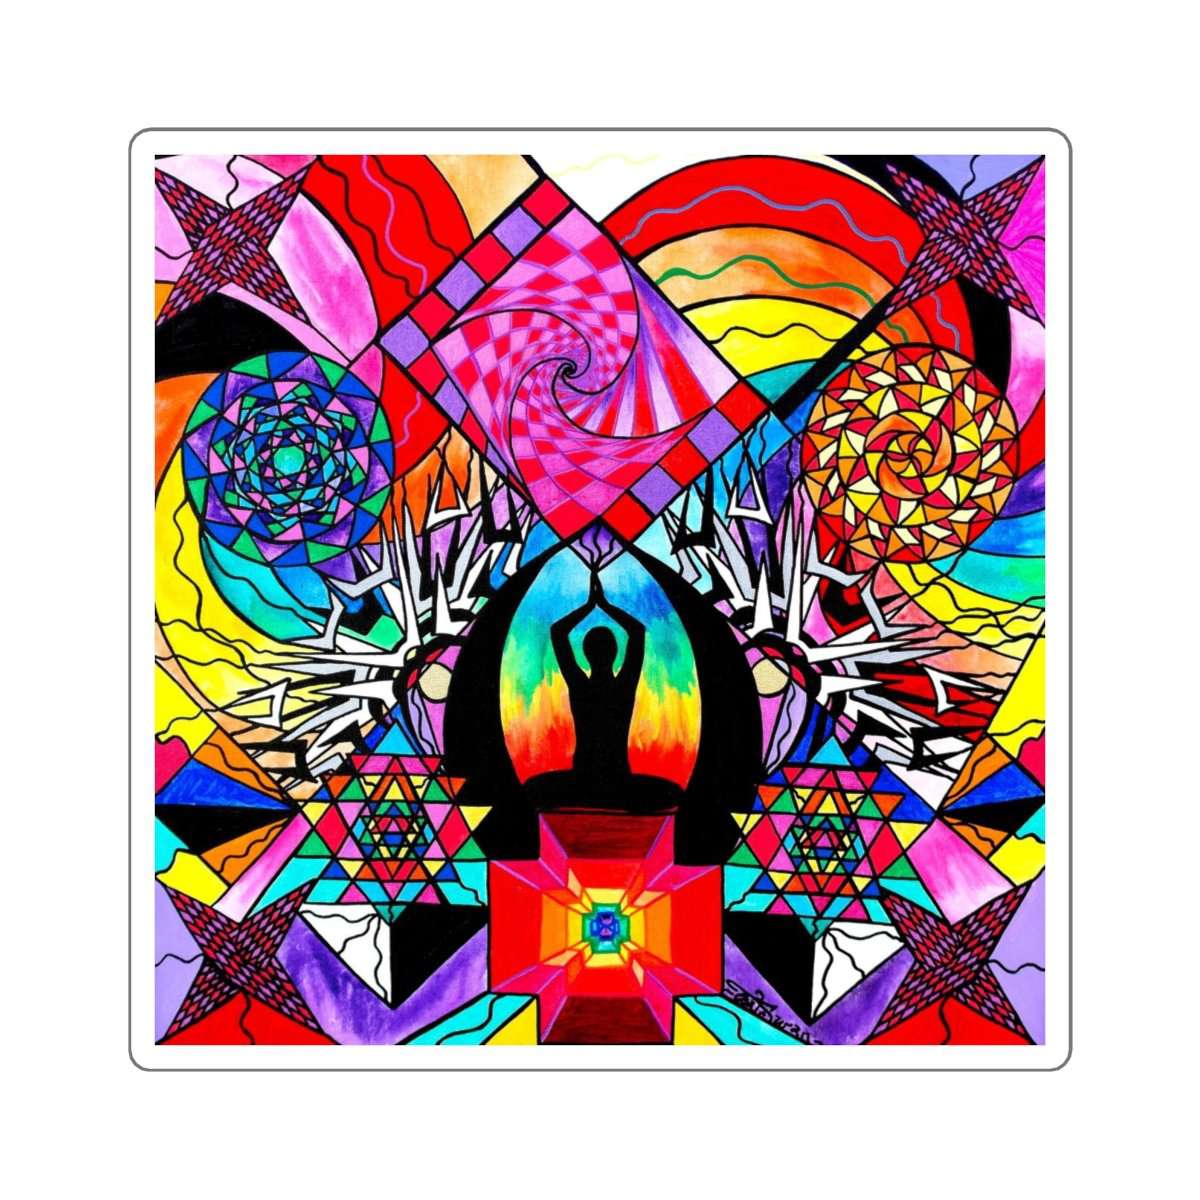 Meditation Aid - Square Stickers